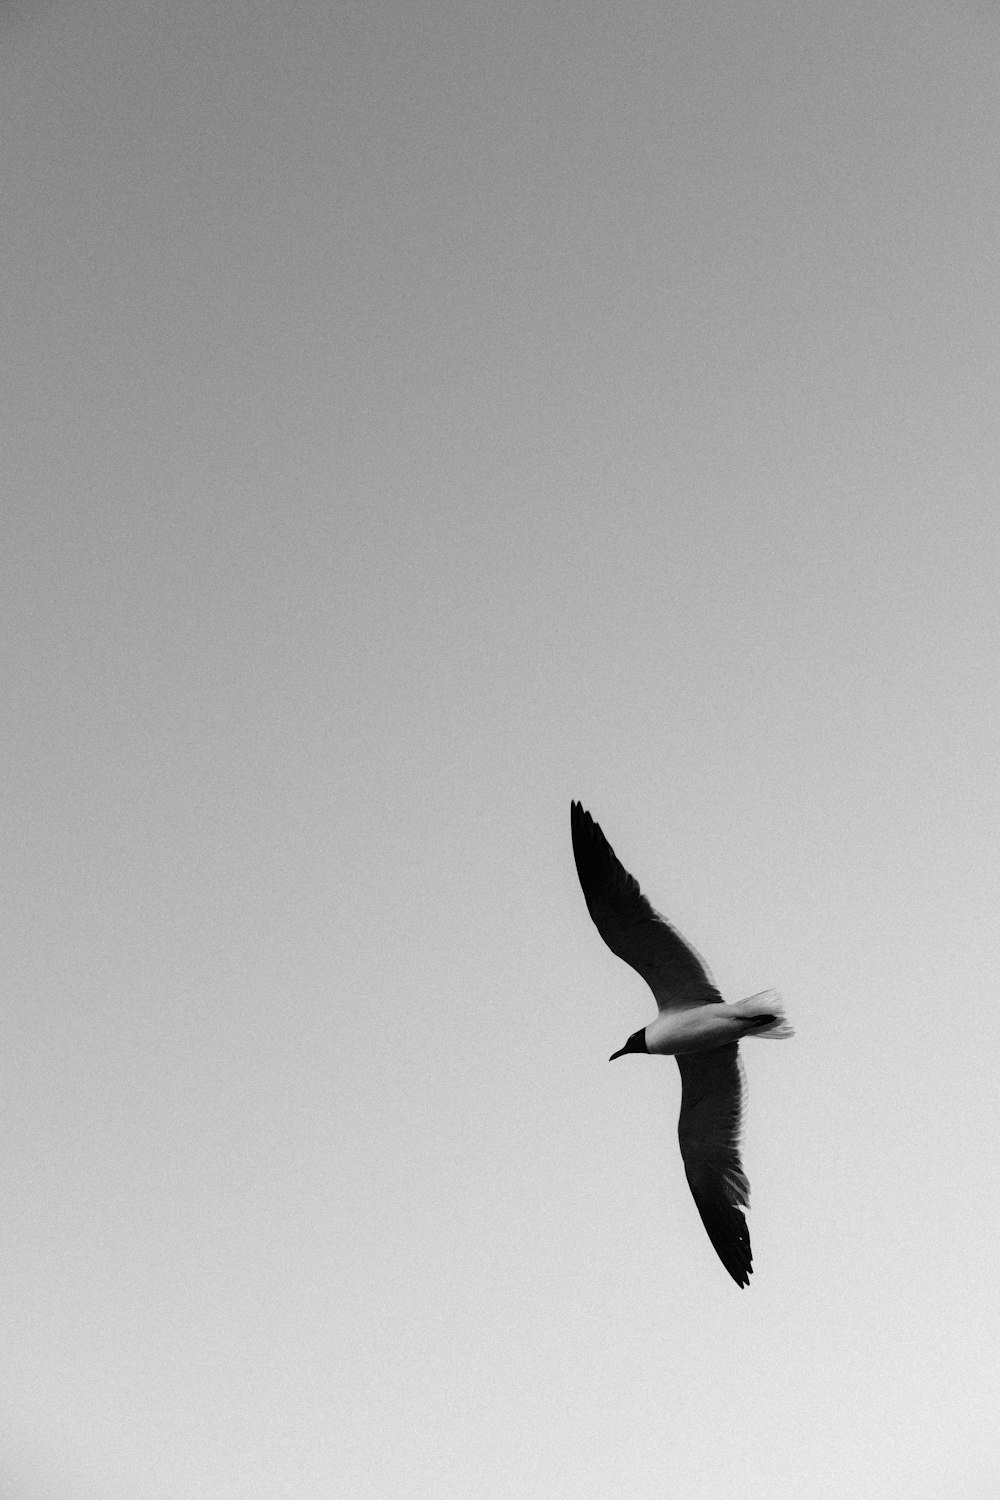 white and black bird flying